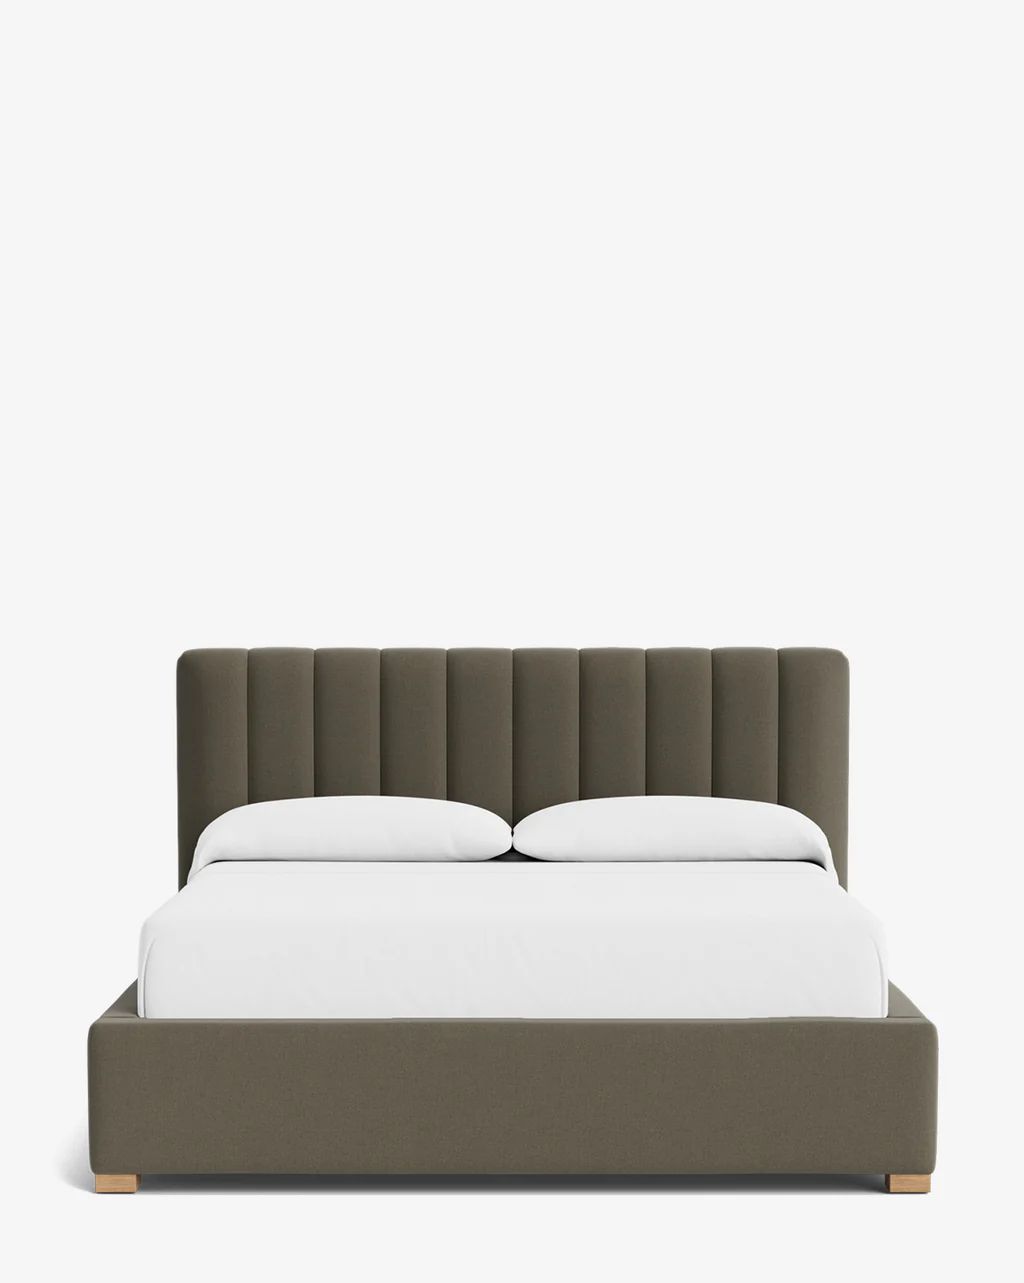 Hoffman Bed with 52" Headboard | McGee & Co.